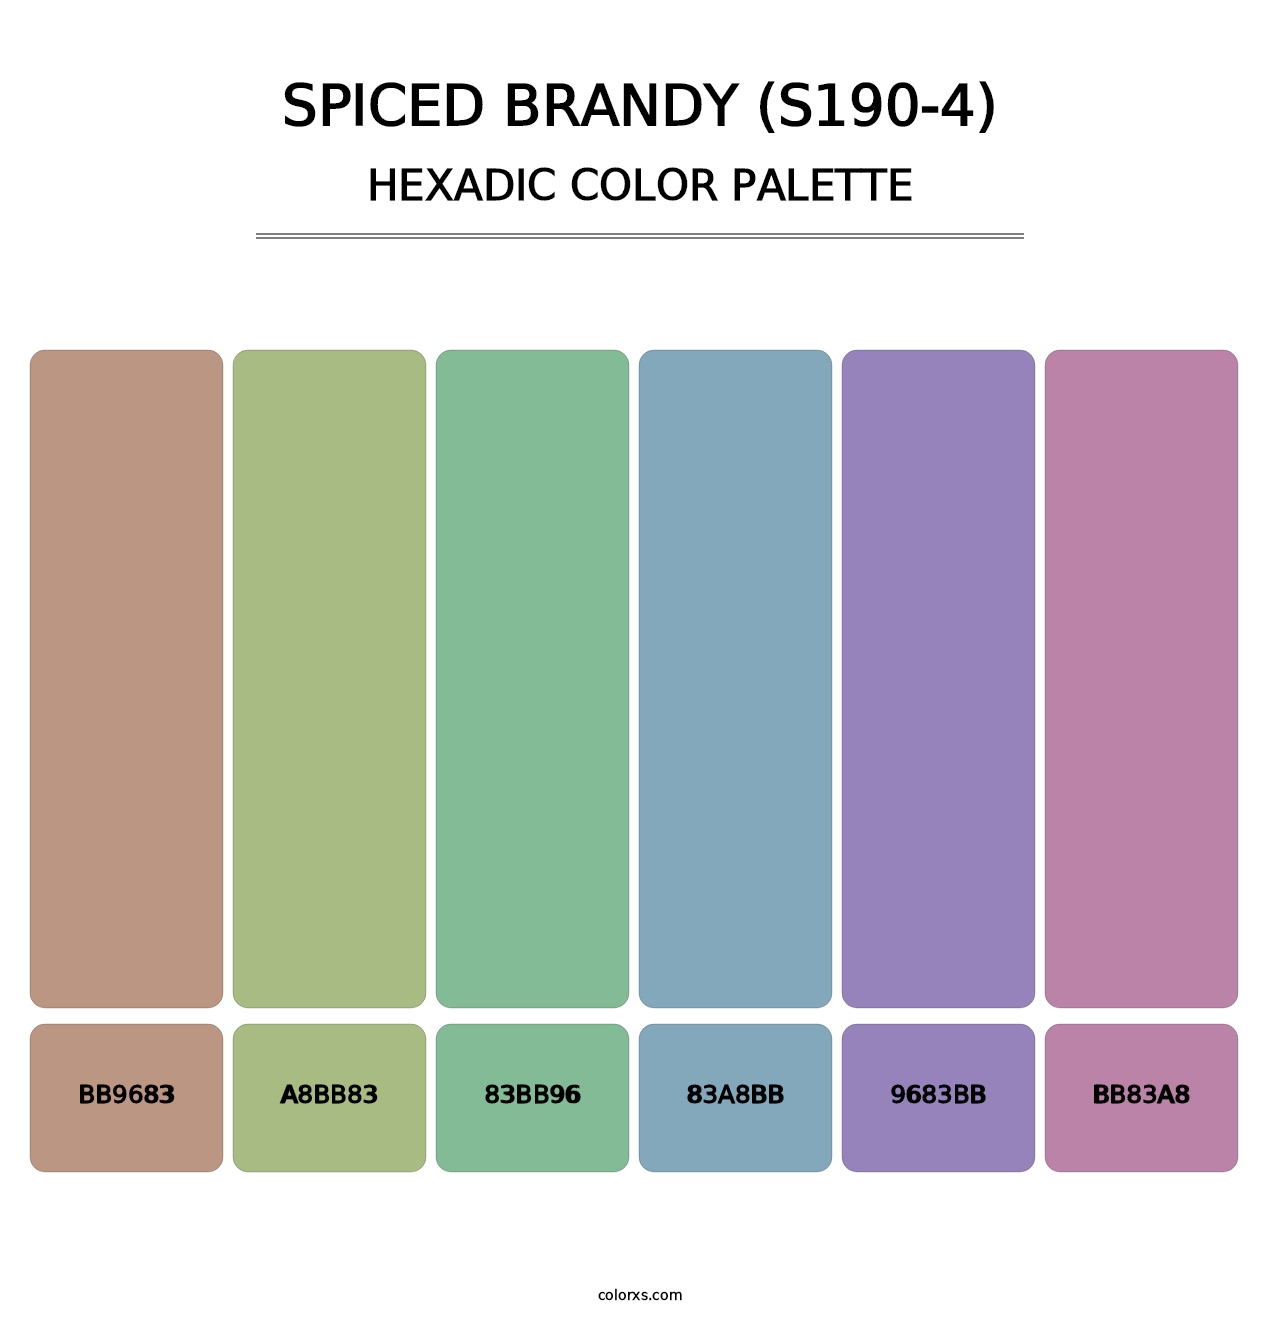 Spiced Brandy (S190-4) - Hexadic Color Palette